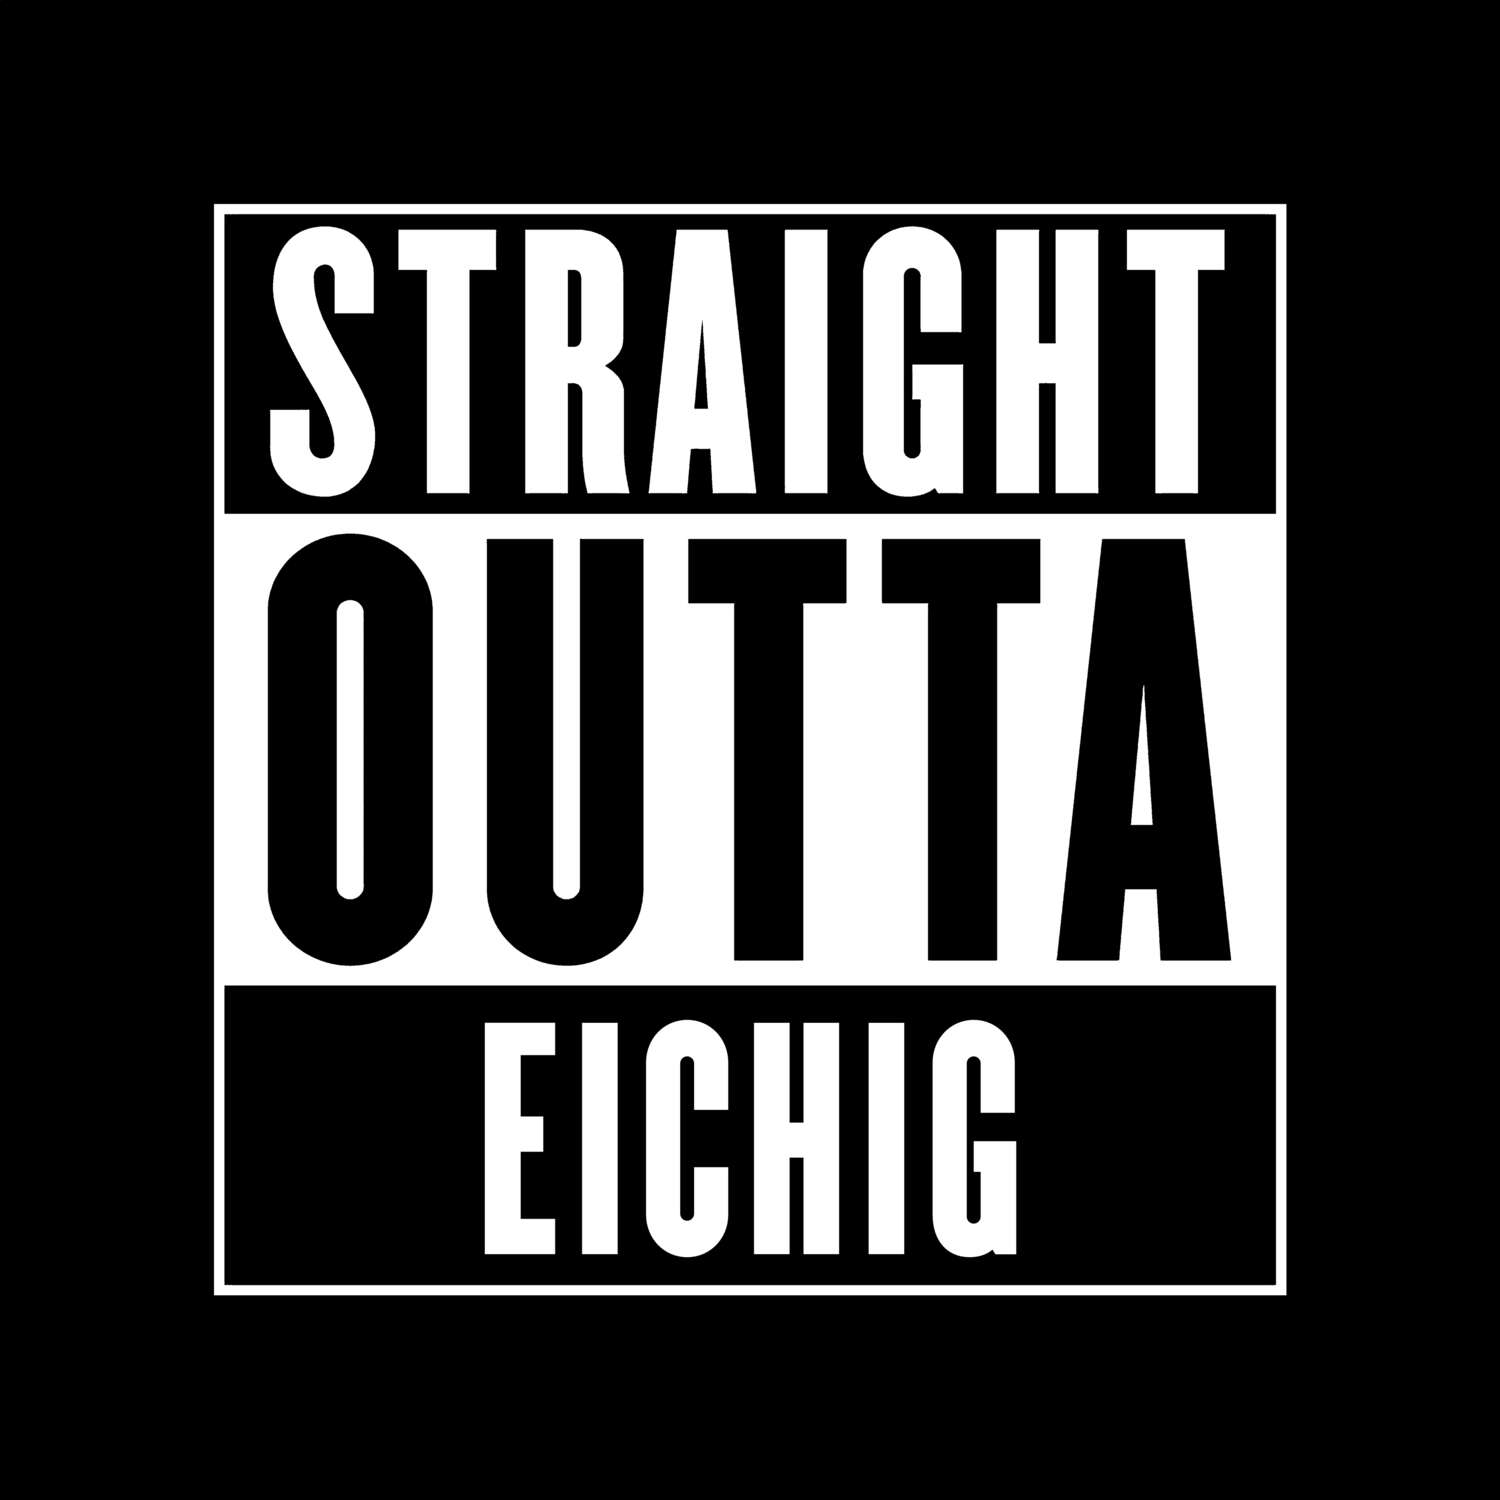 Eichig T-Shirt »Straight Outta«